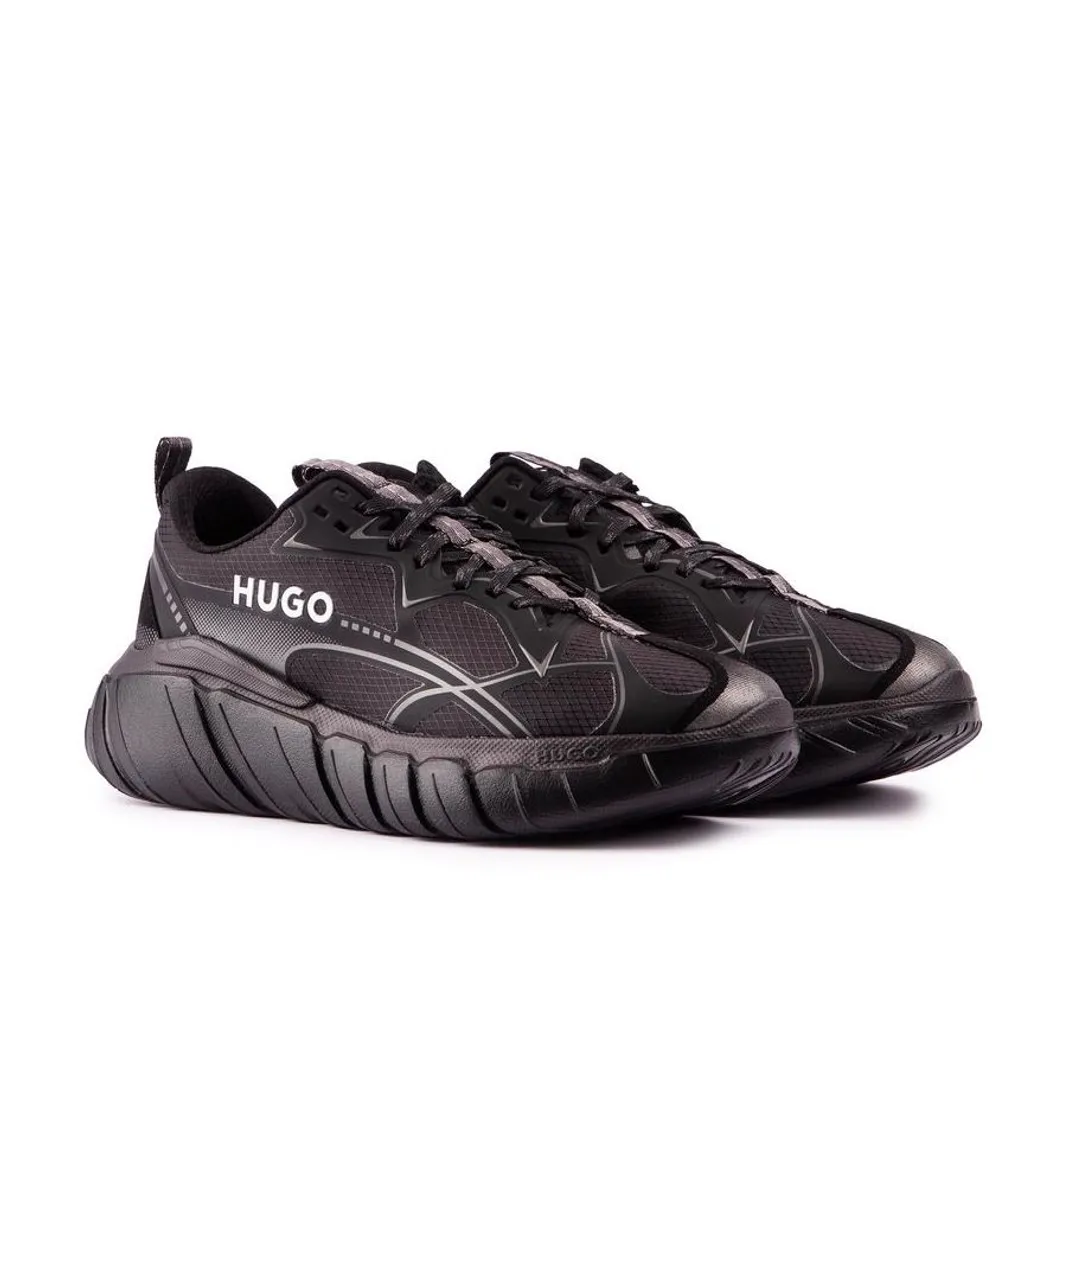 Hugo Mens Xeno Trainers - Black